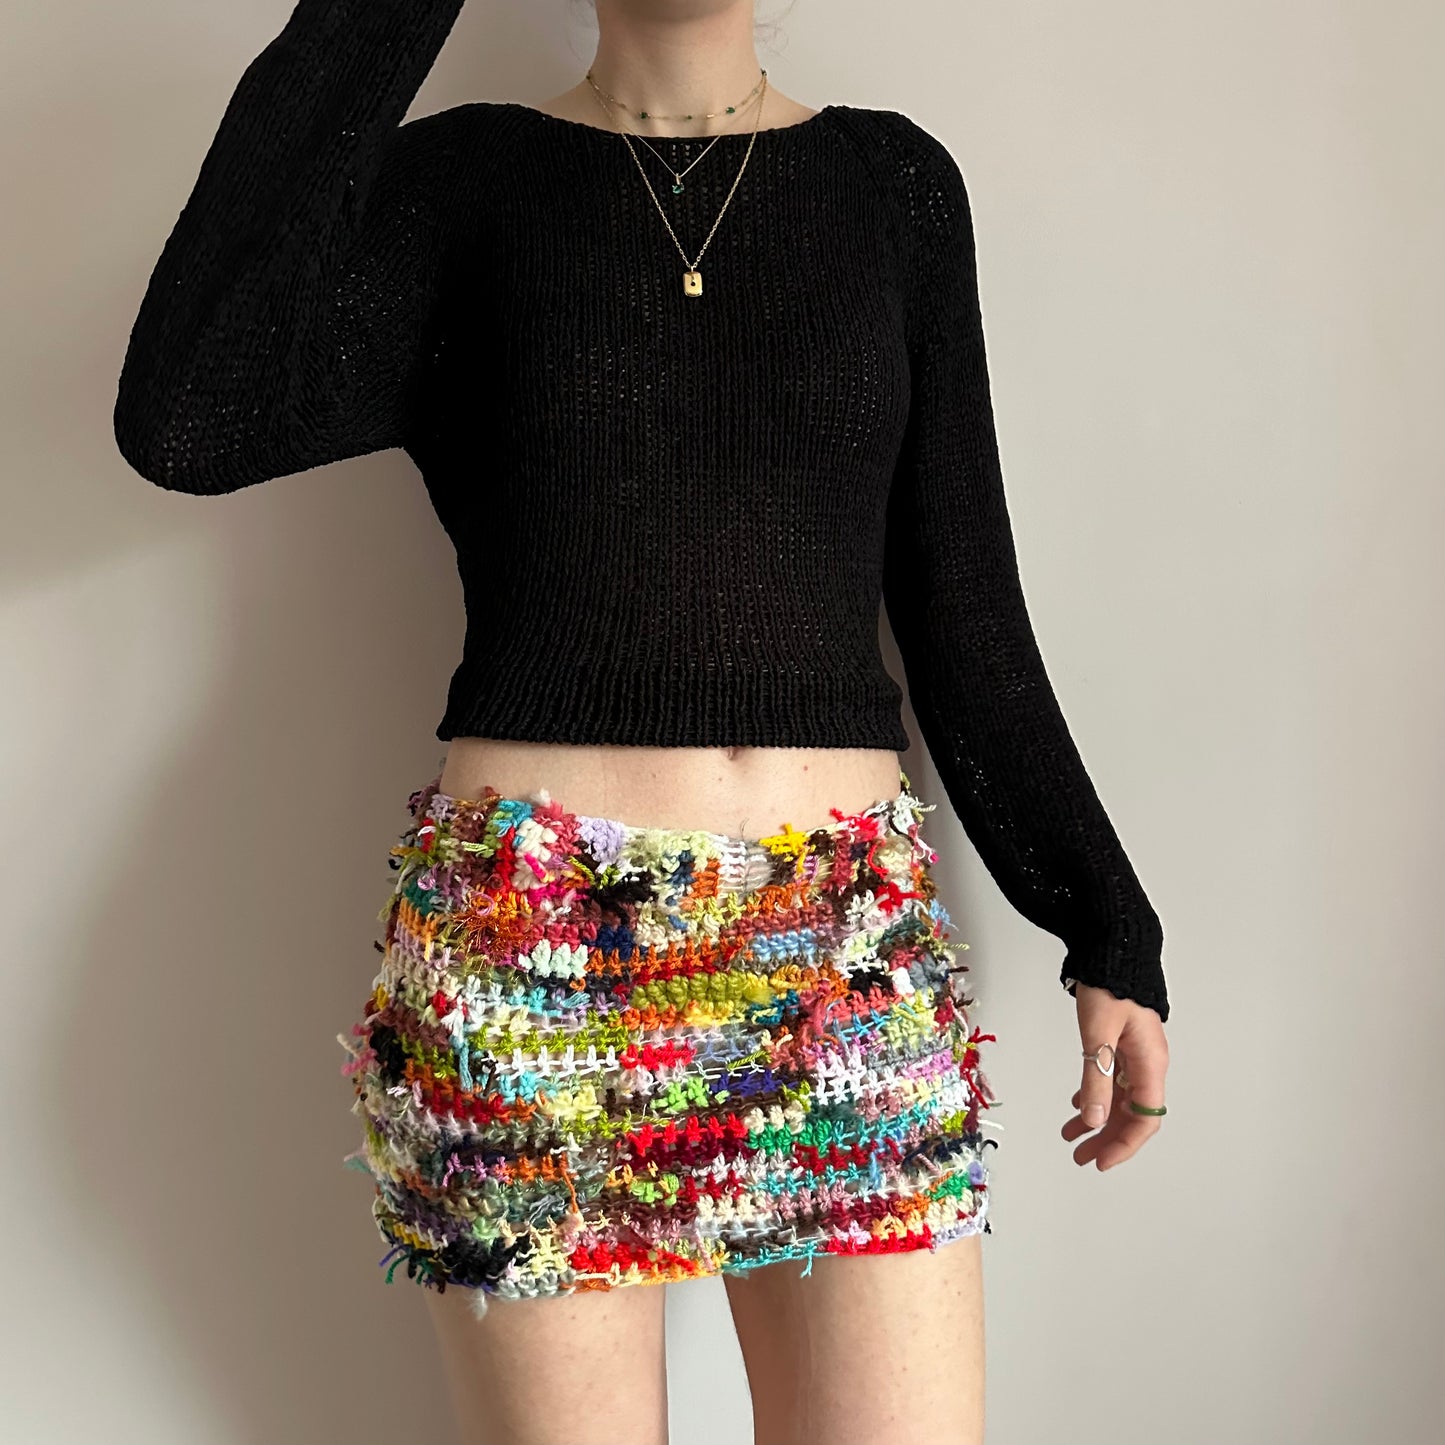 Handmade scrappy crochet mini skirt - 1 of 1, made of leftover yarn scraps